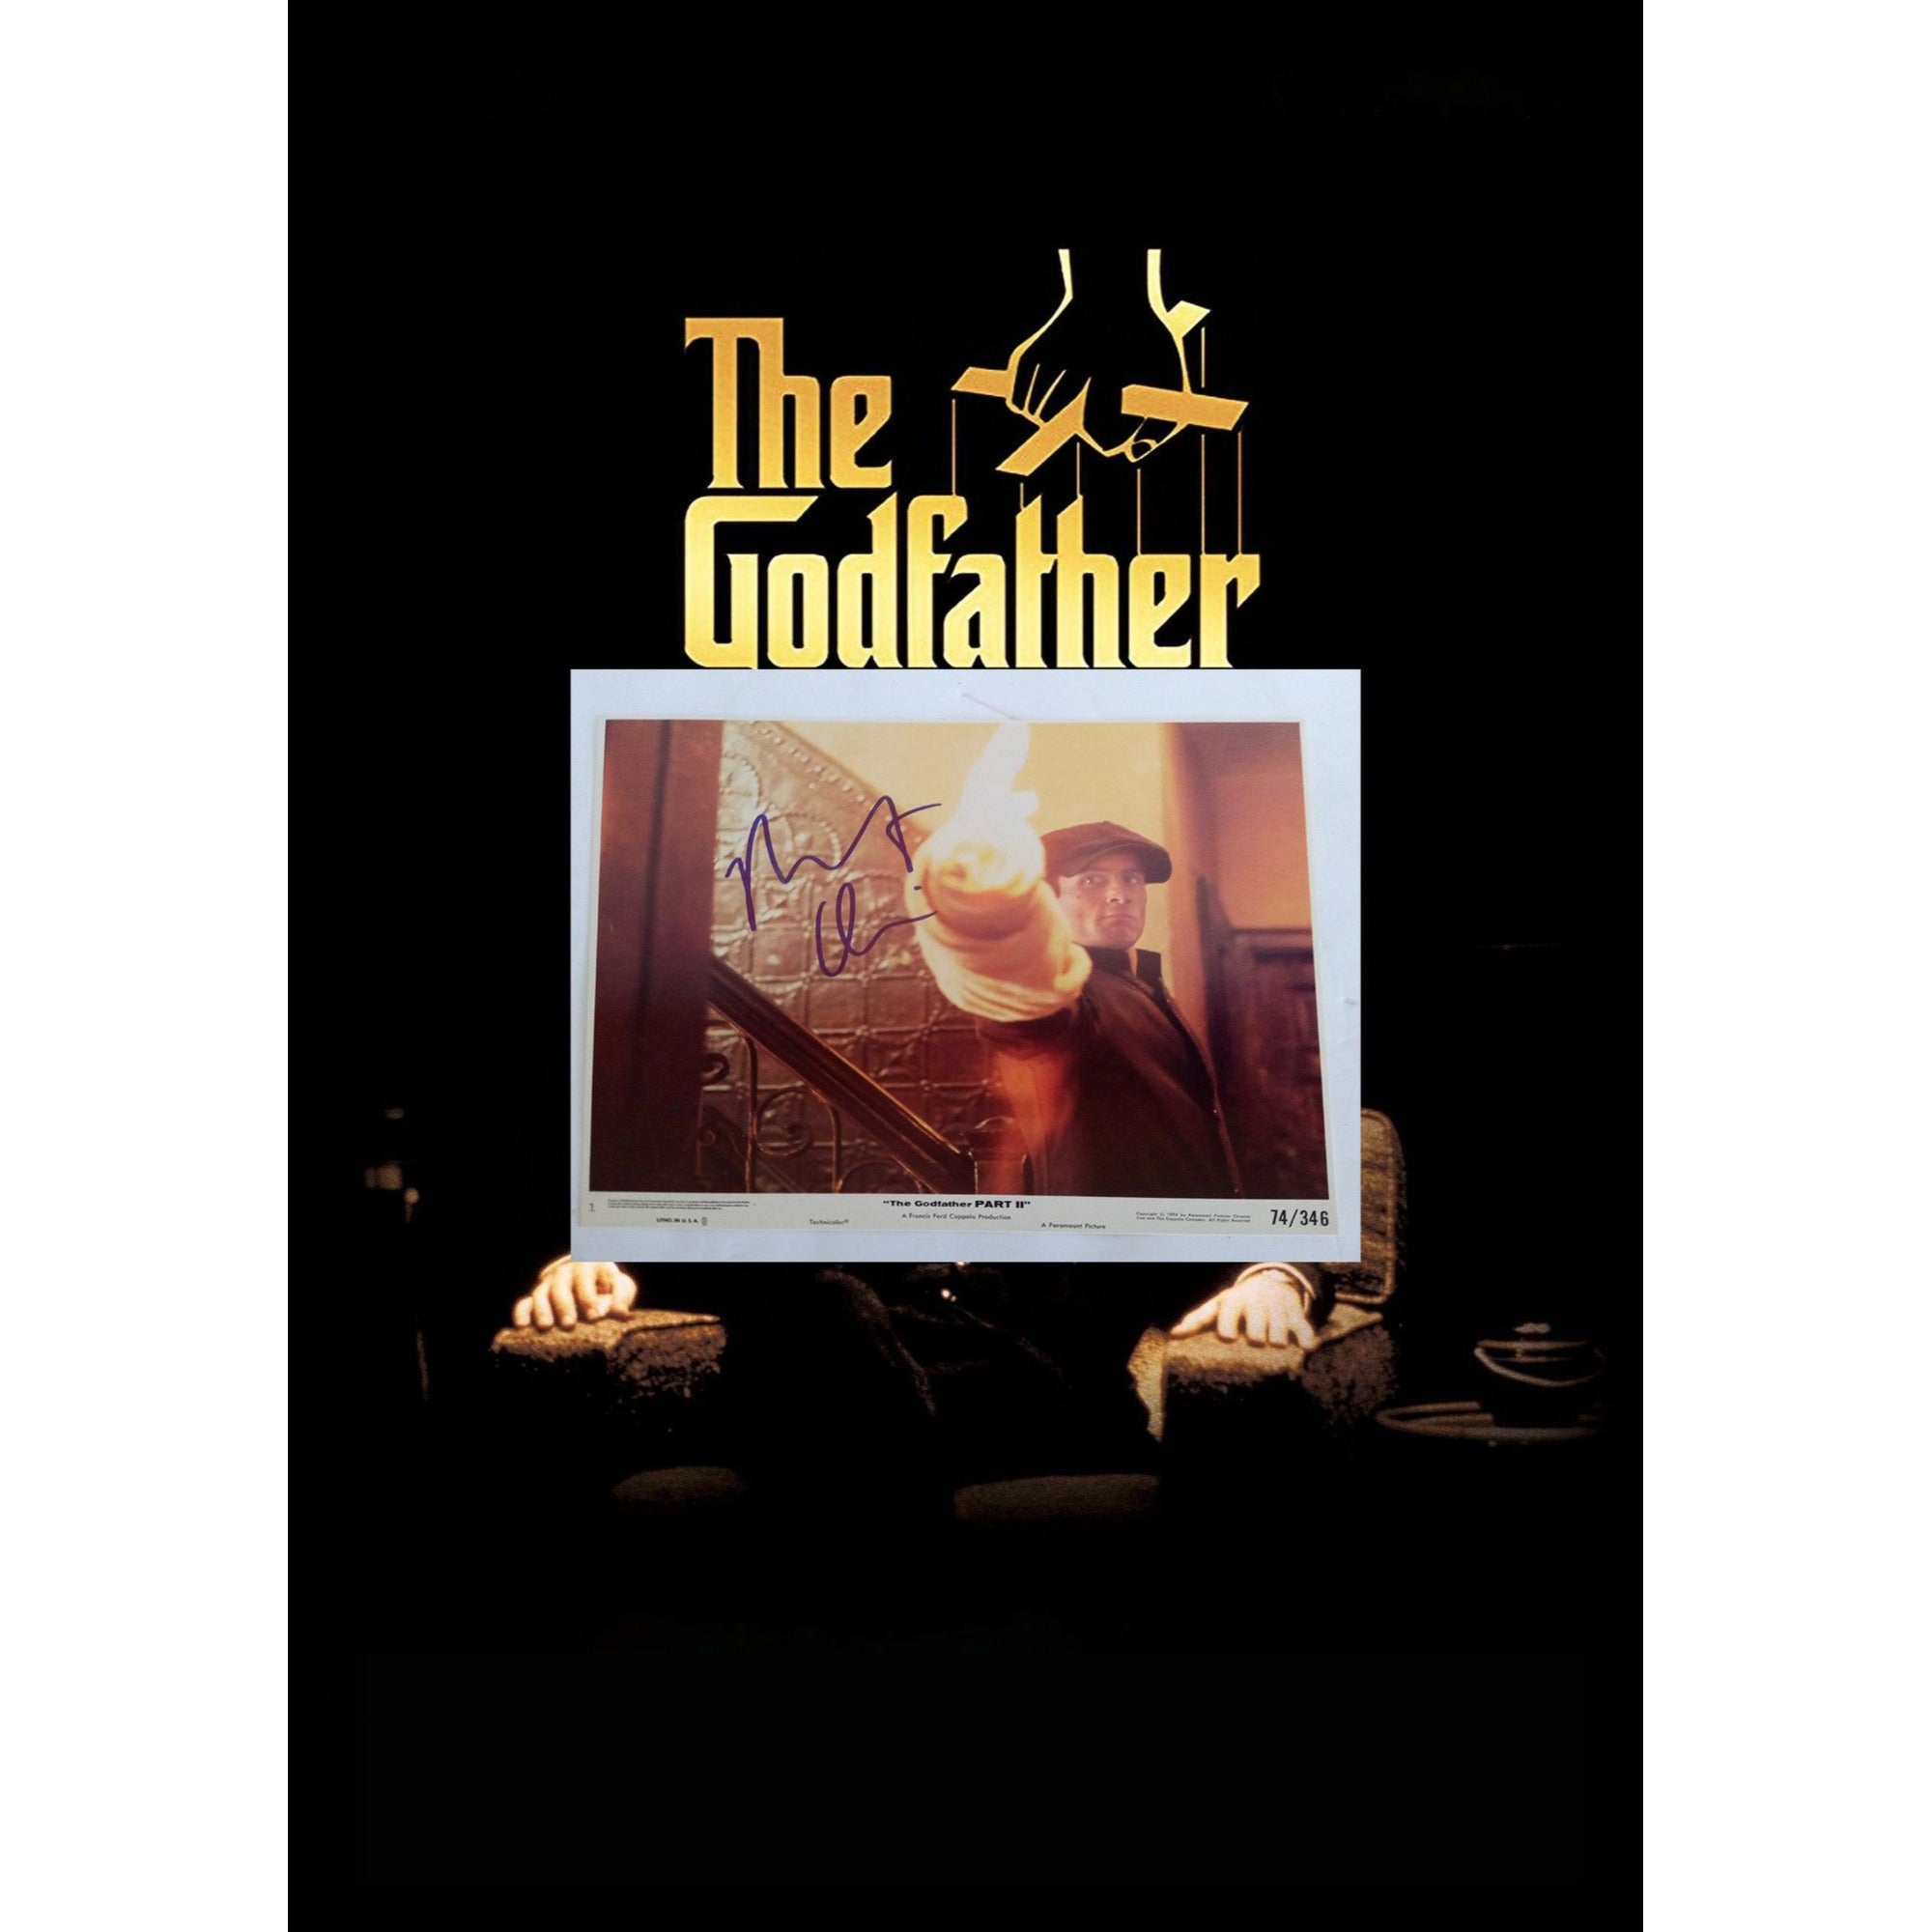 Robert De Niro III original lobby card 1972 the Godfather 8x10 signed with proof